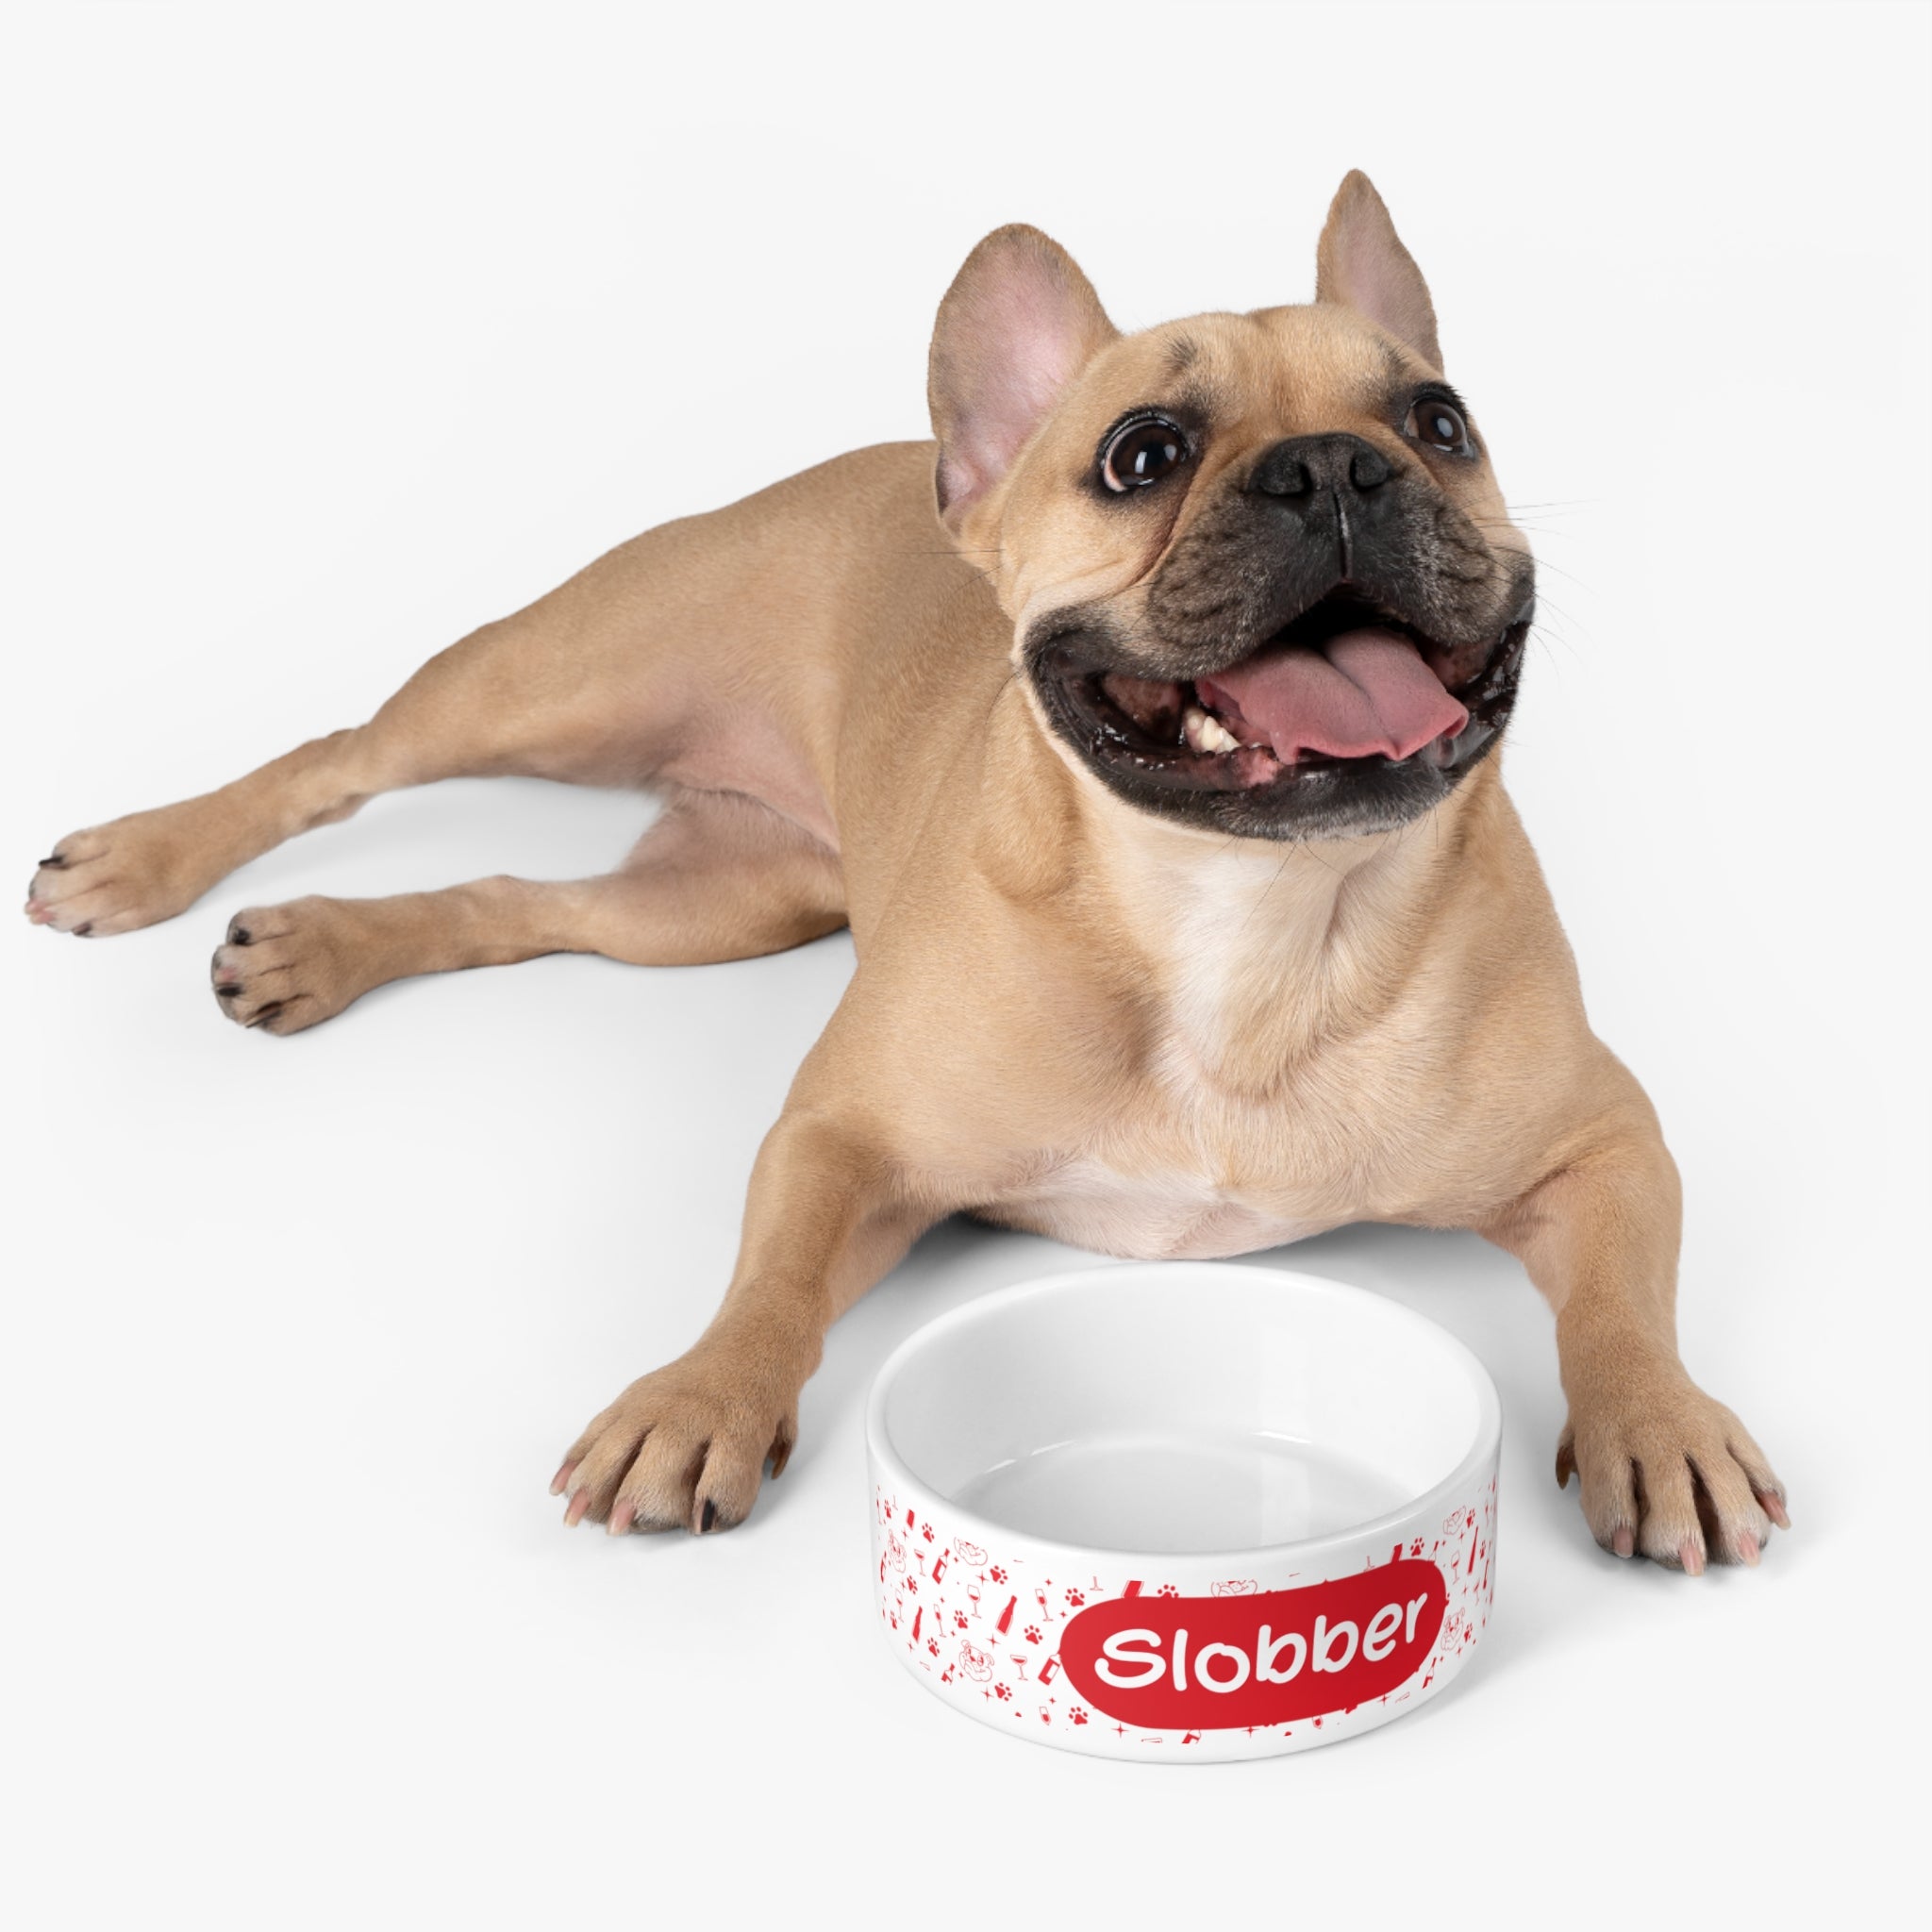 Copy of Tipsy Bully "Slobber" Dog Food Bowl (Red)